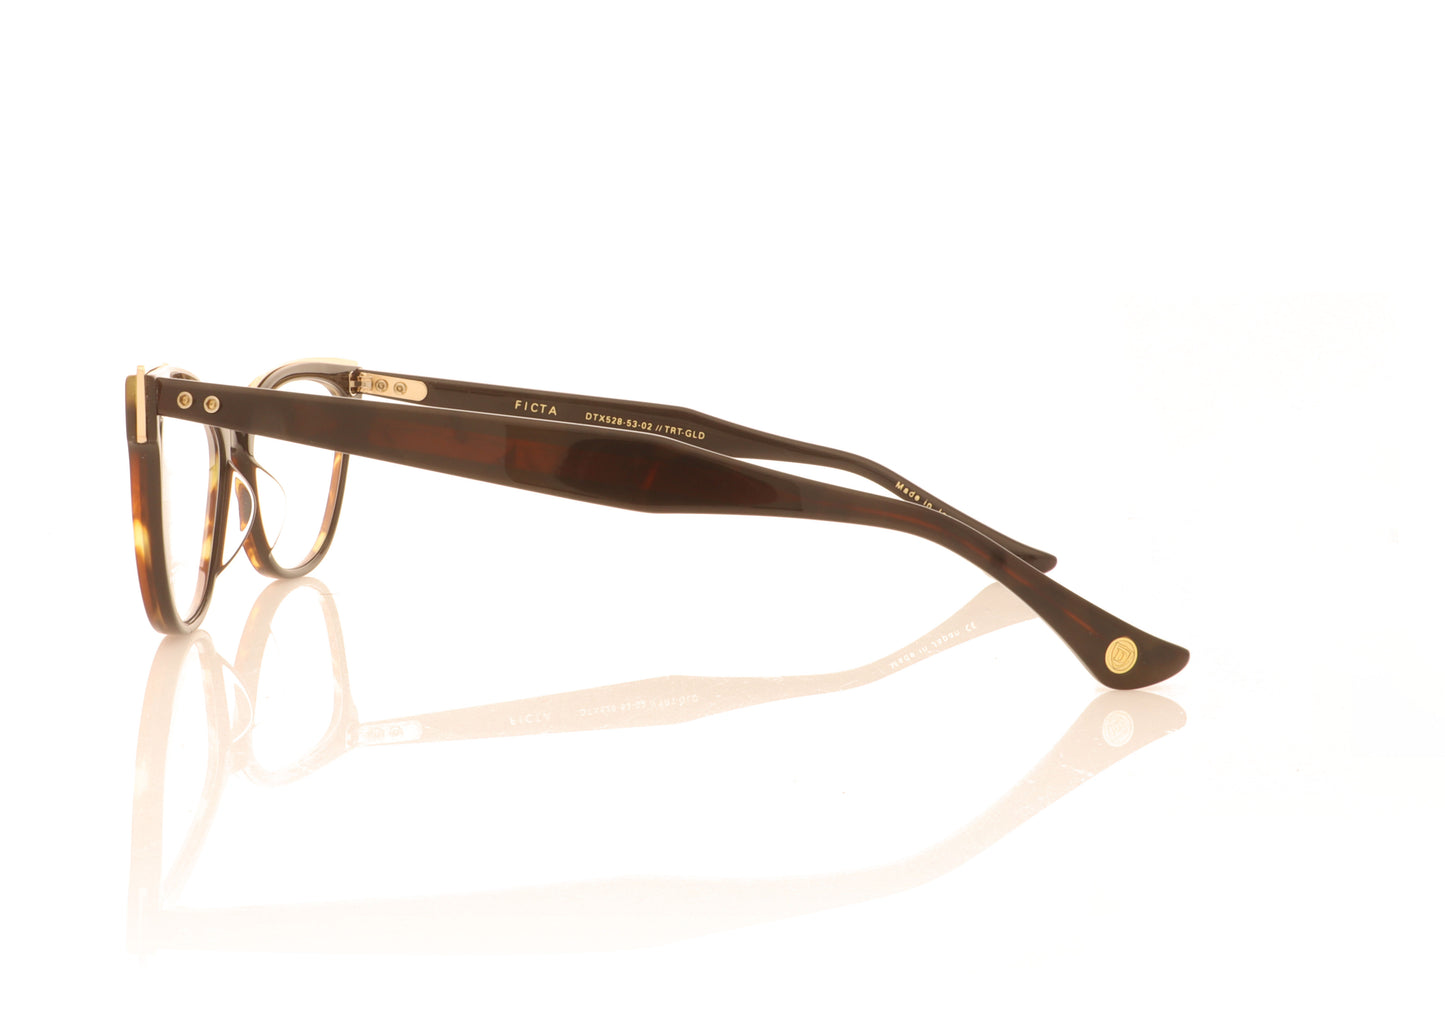 DITA Ficta DTX528-53-03 02 Tortoise Glasses - Side